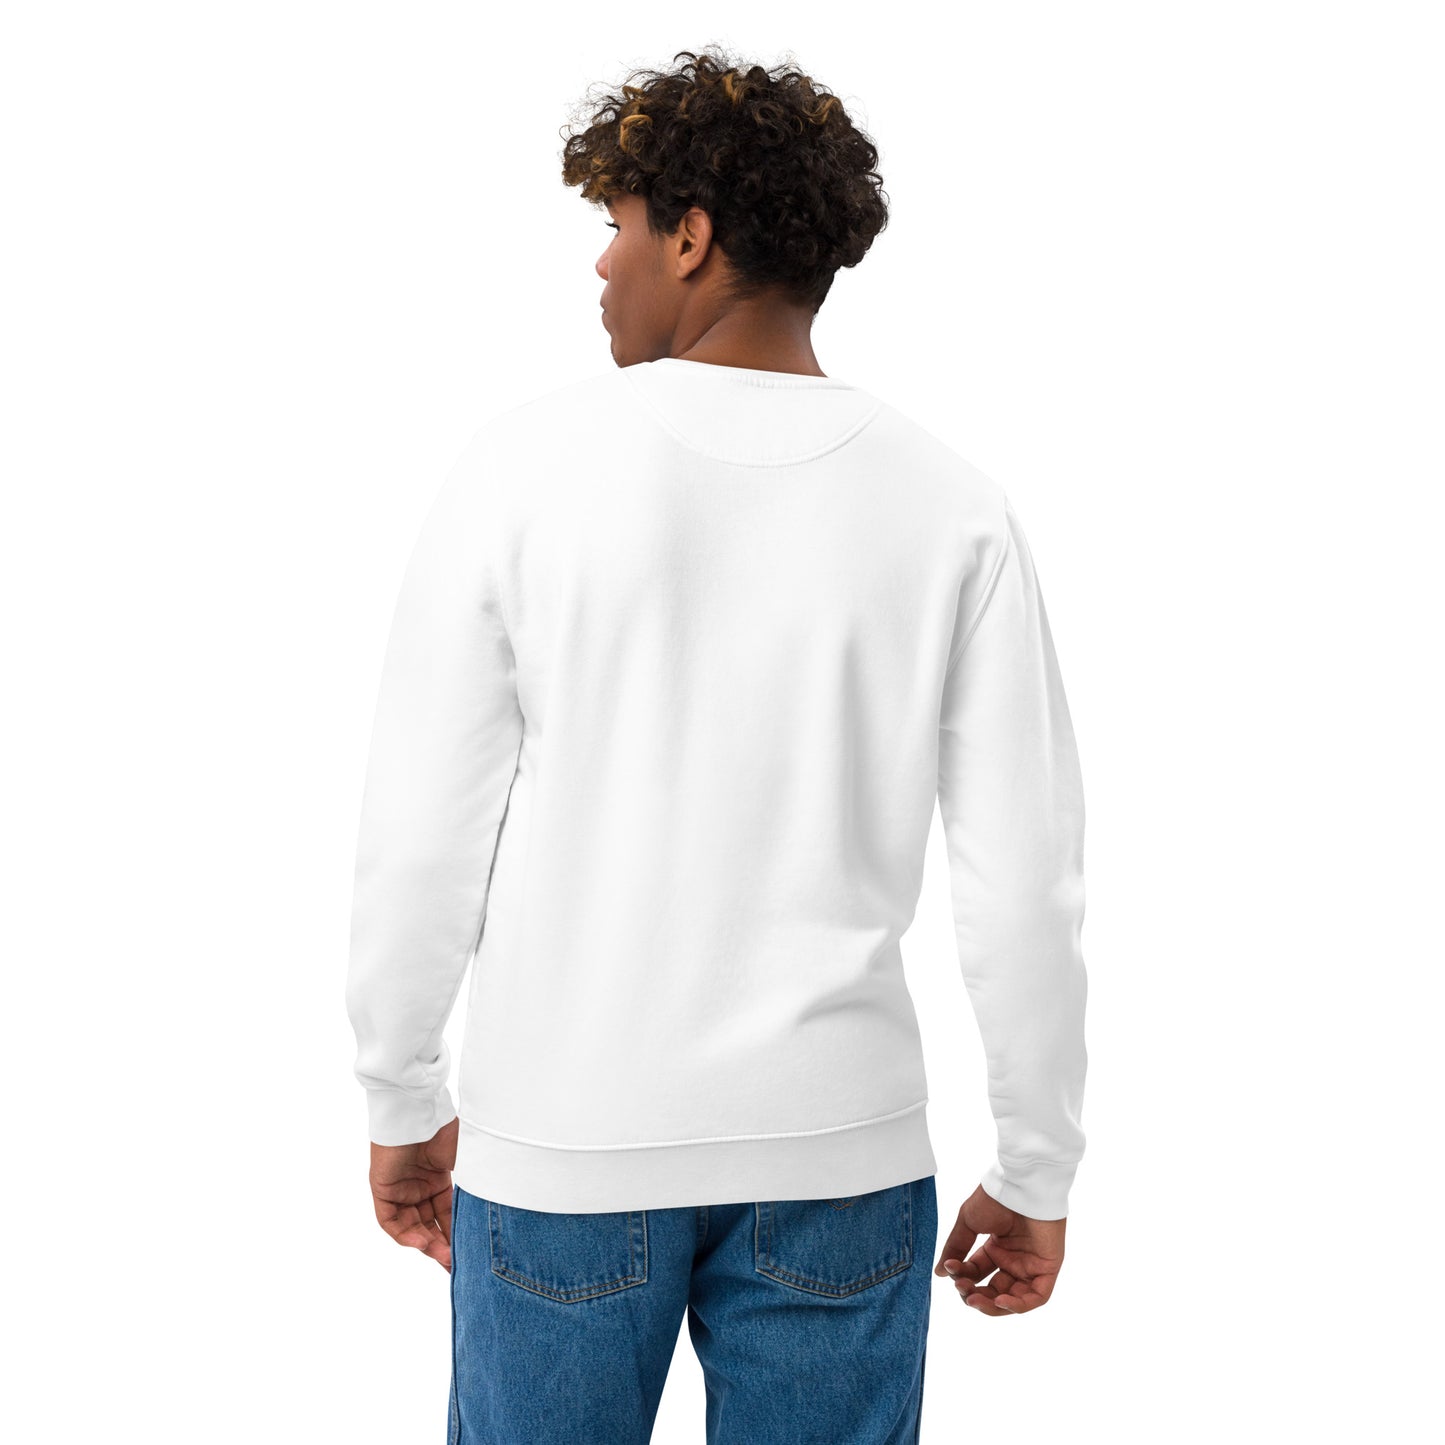 TE015.1 - Unisex Bio-Pullover - Sweater - Sweatshirt - Social Media Trend - Maskhara 1 - black logo